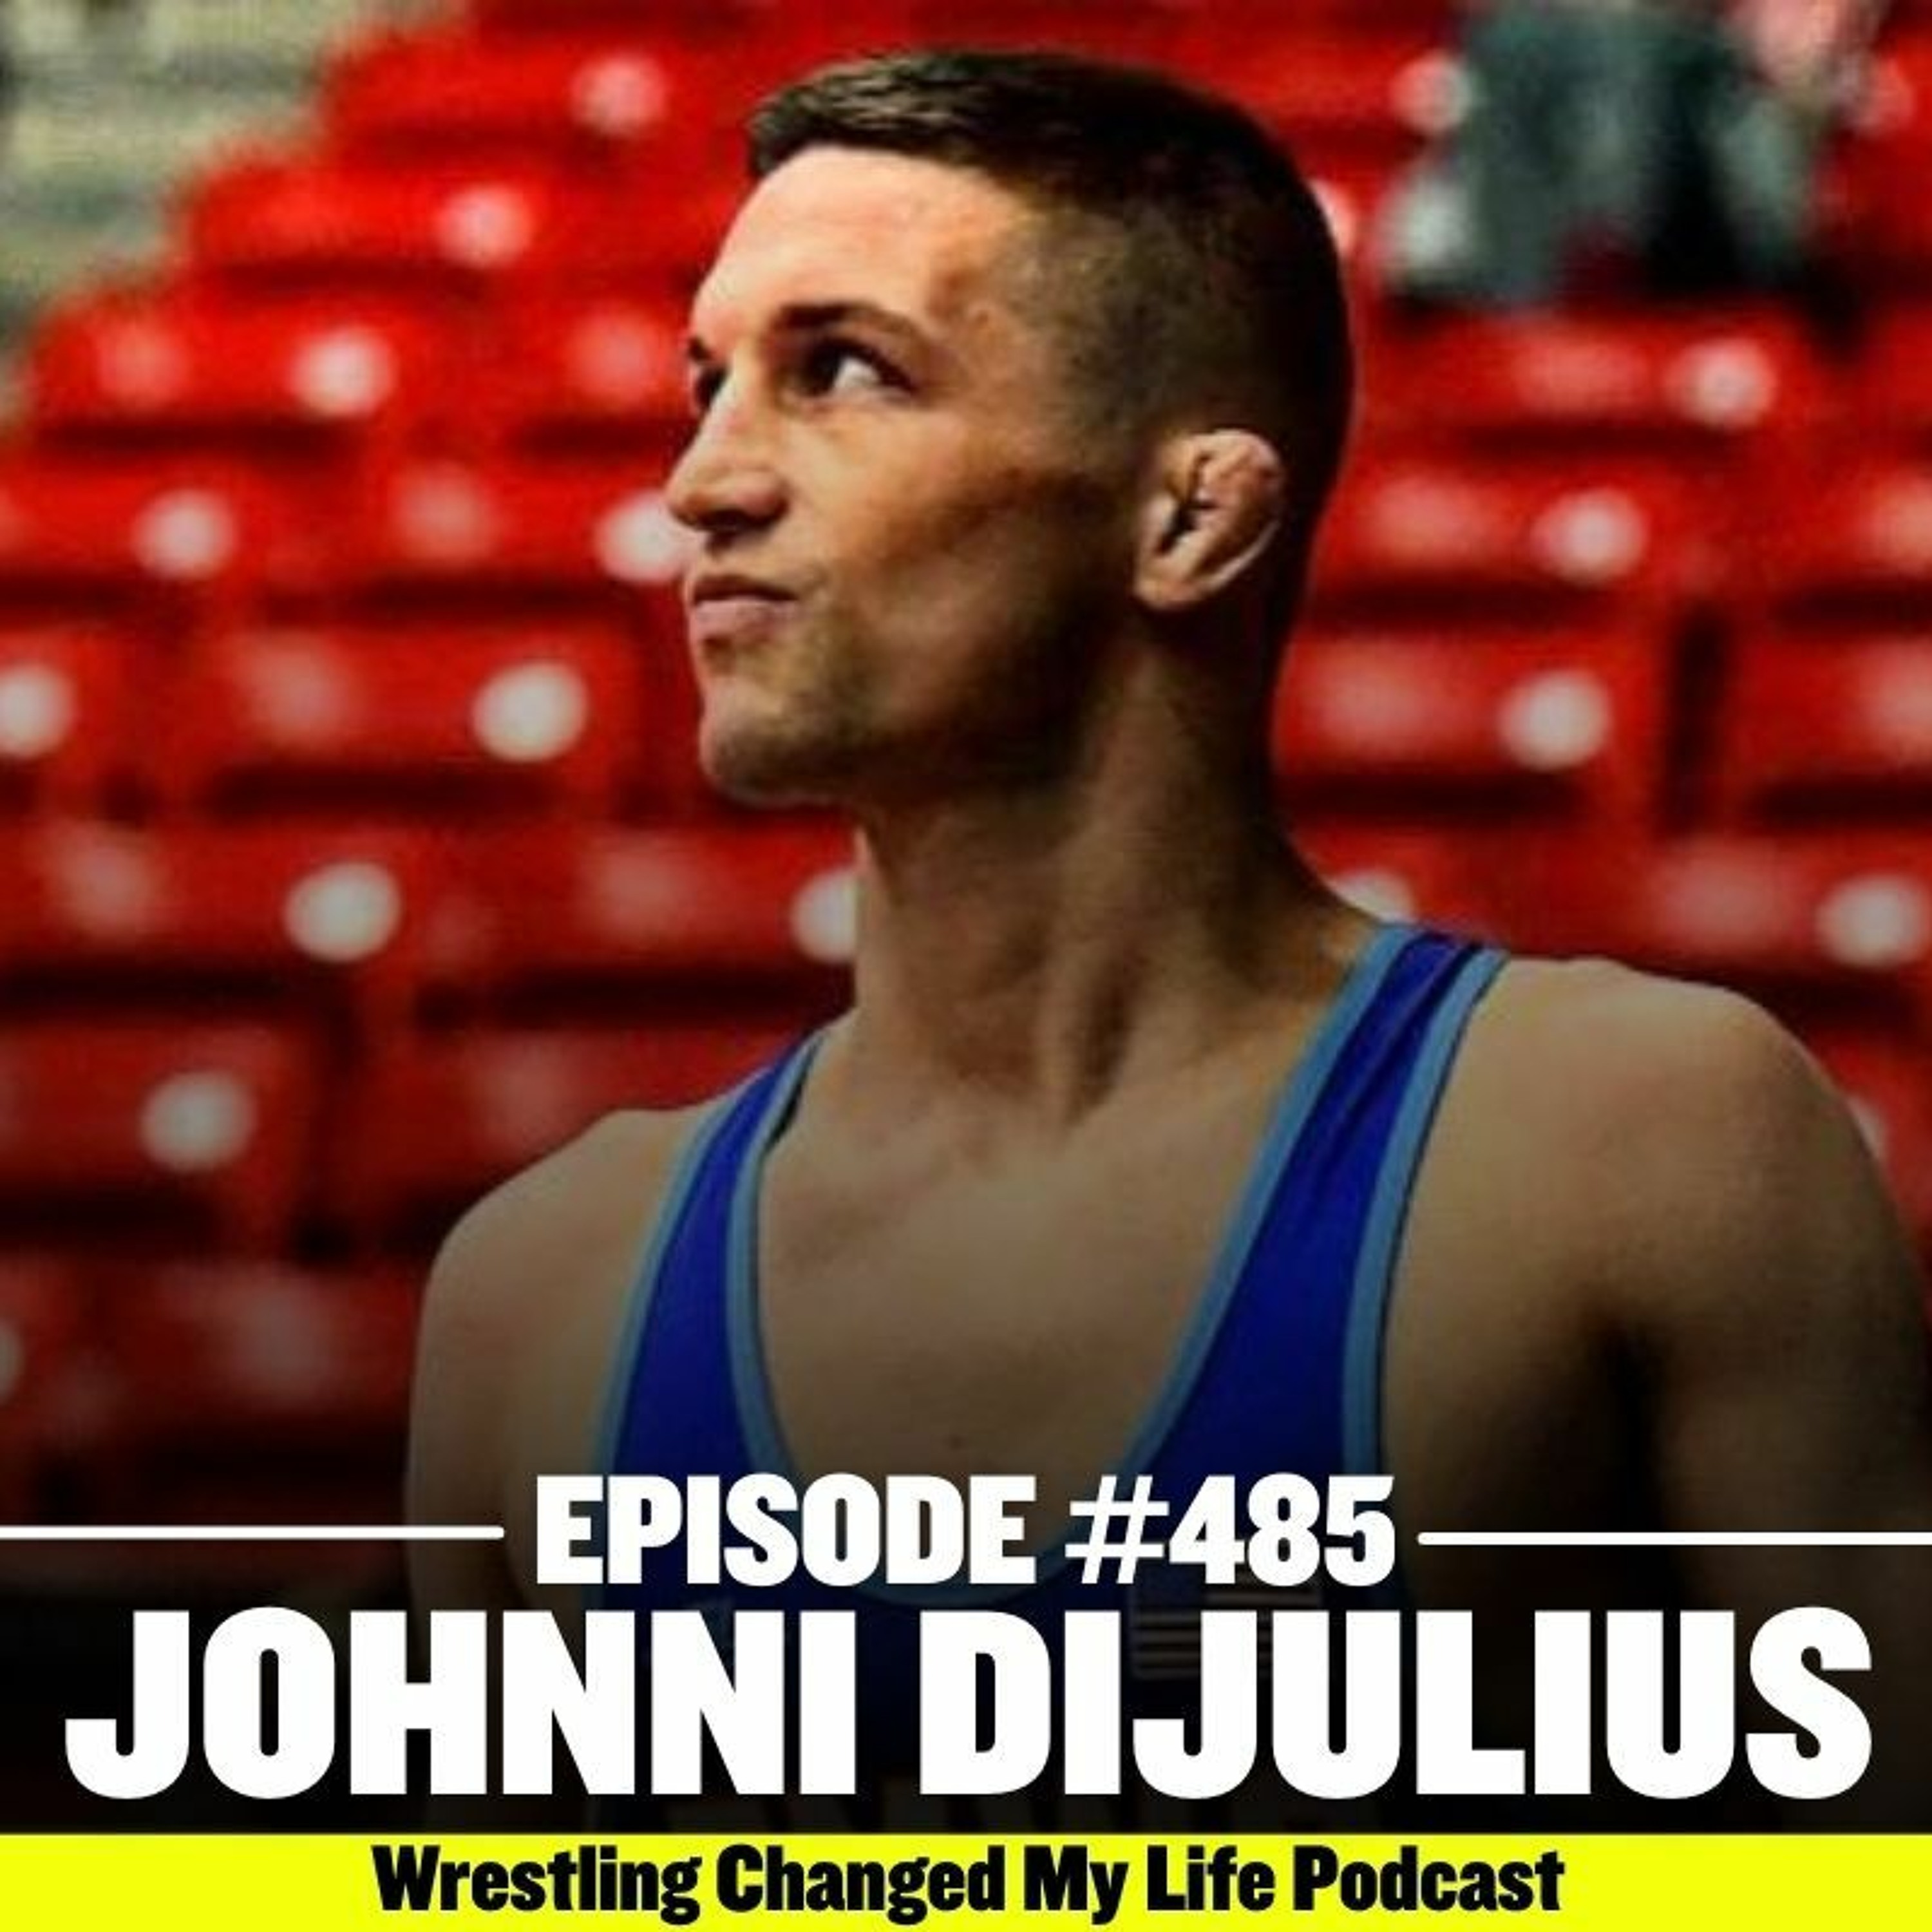 #485 Johnni DiJulius - Ohio State Alum , 3x OH State Champ, BASE Jumper